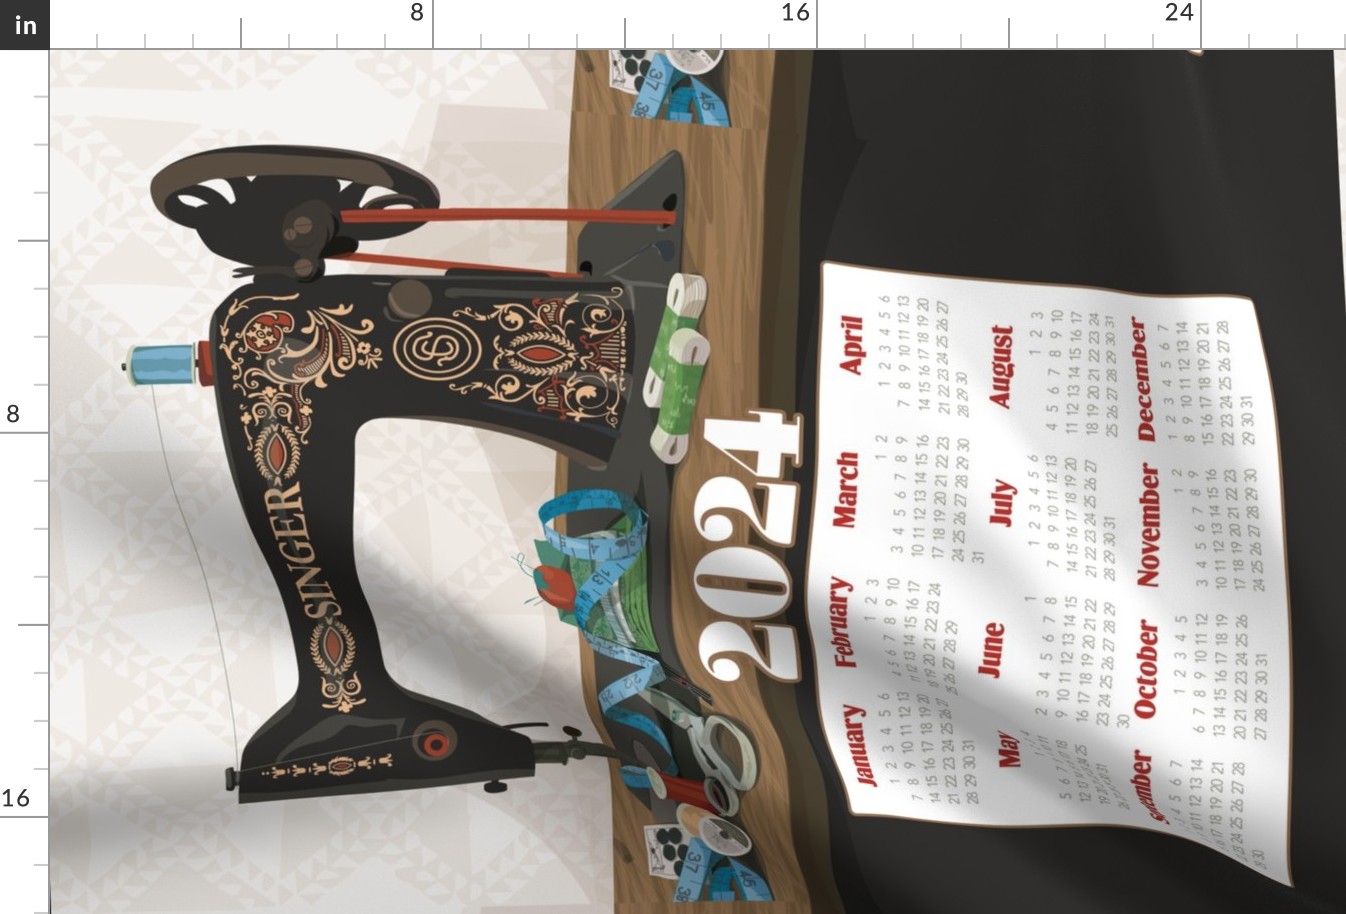 2024 Calendar Towel Singer Sewing Machine